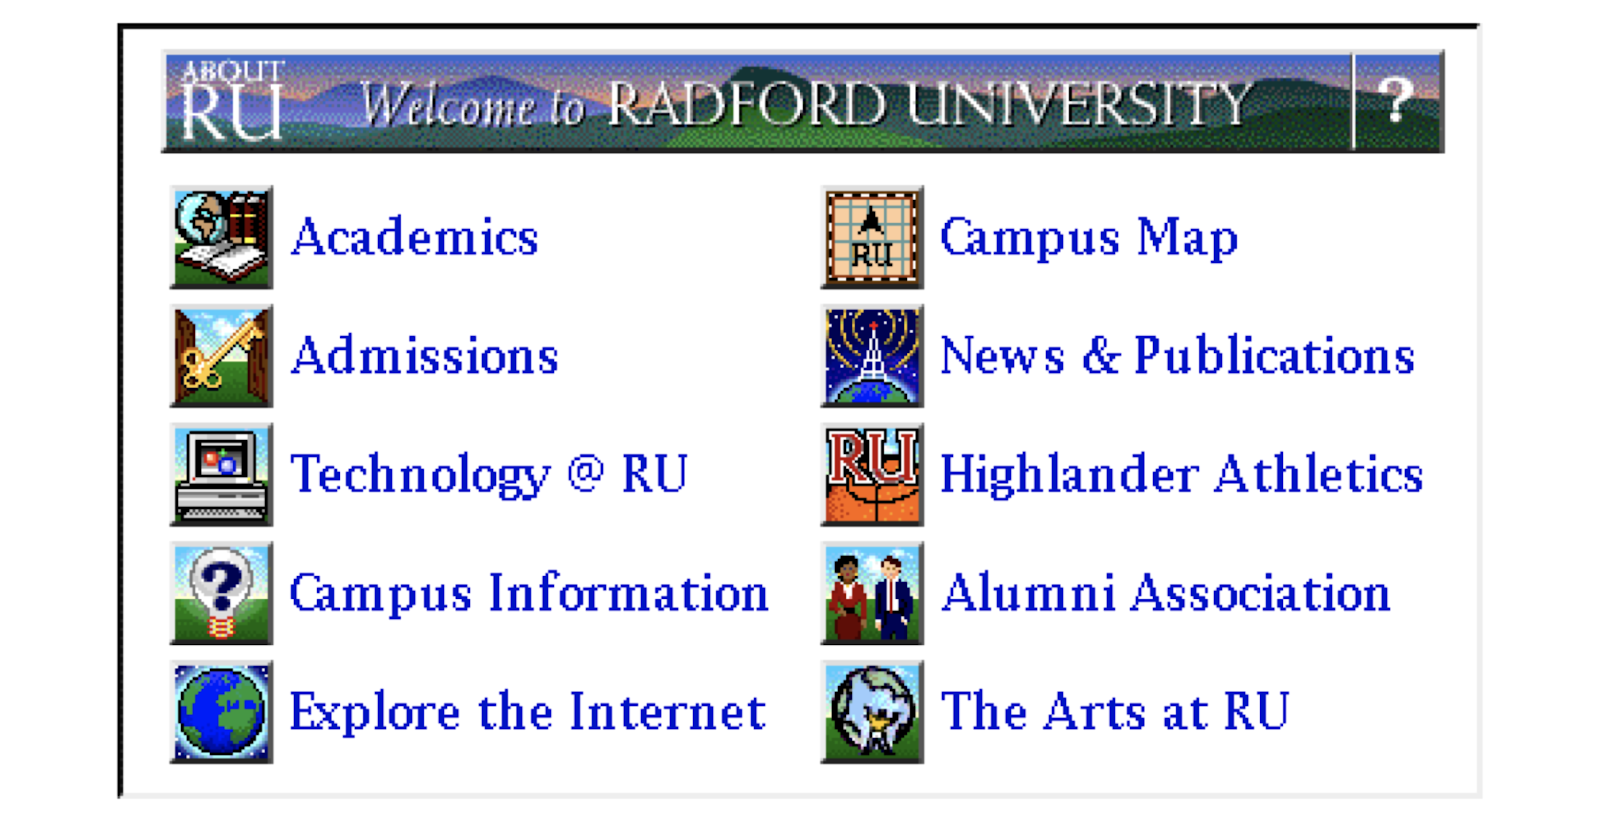 Radford University website, 1994